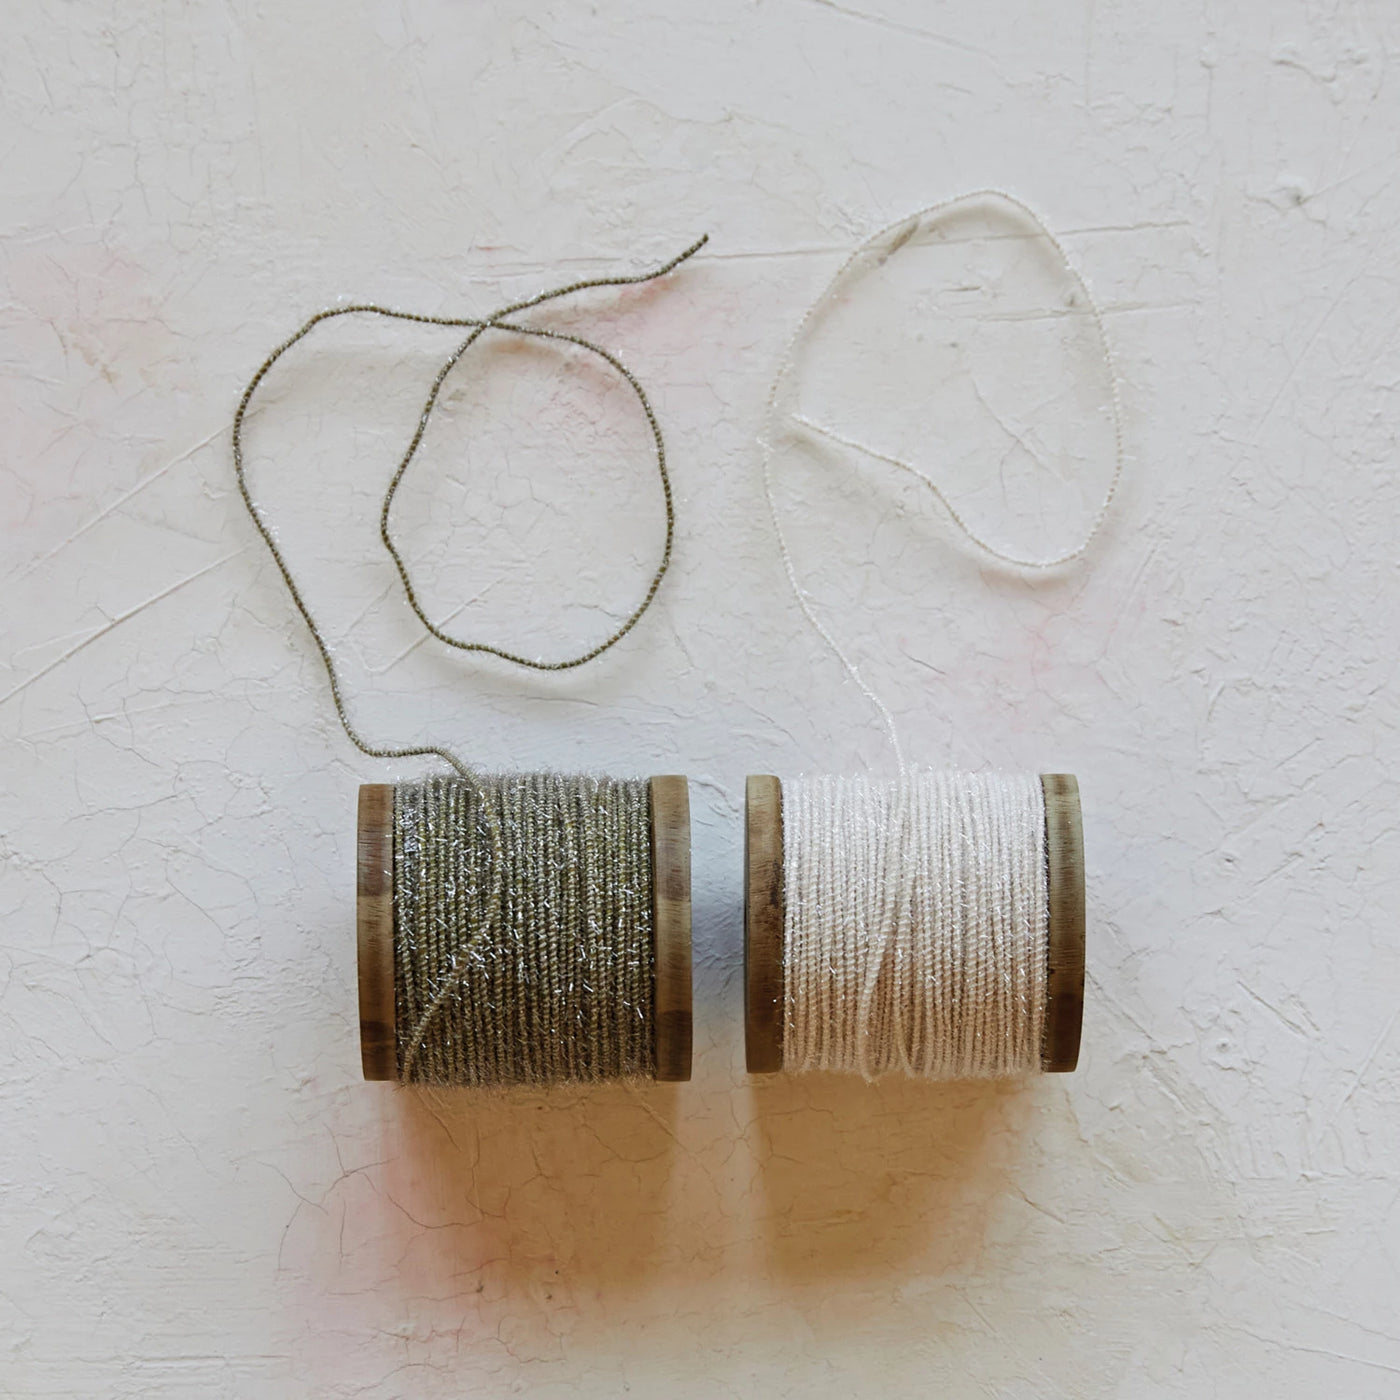 Iridescent Tinsel Cotton Cord on Wood Spool